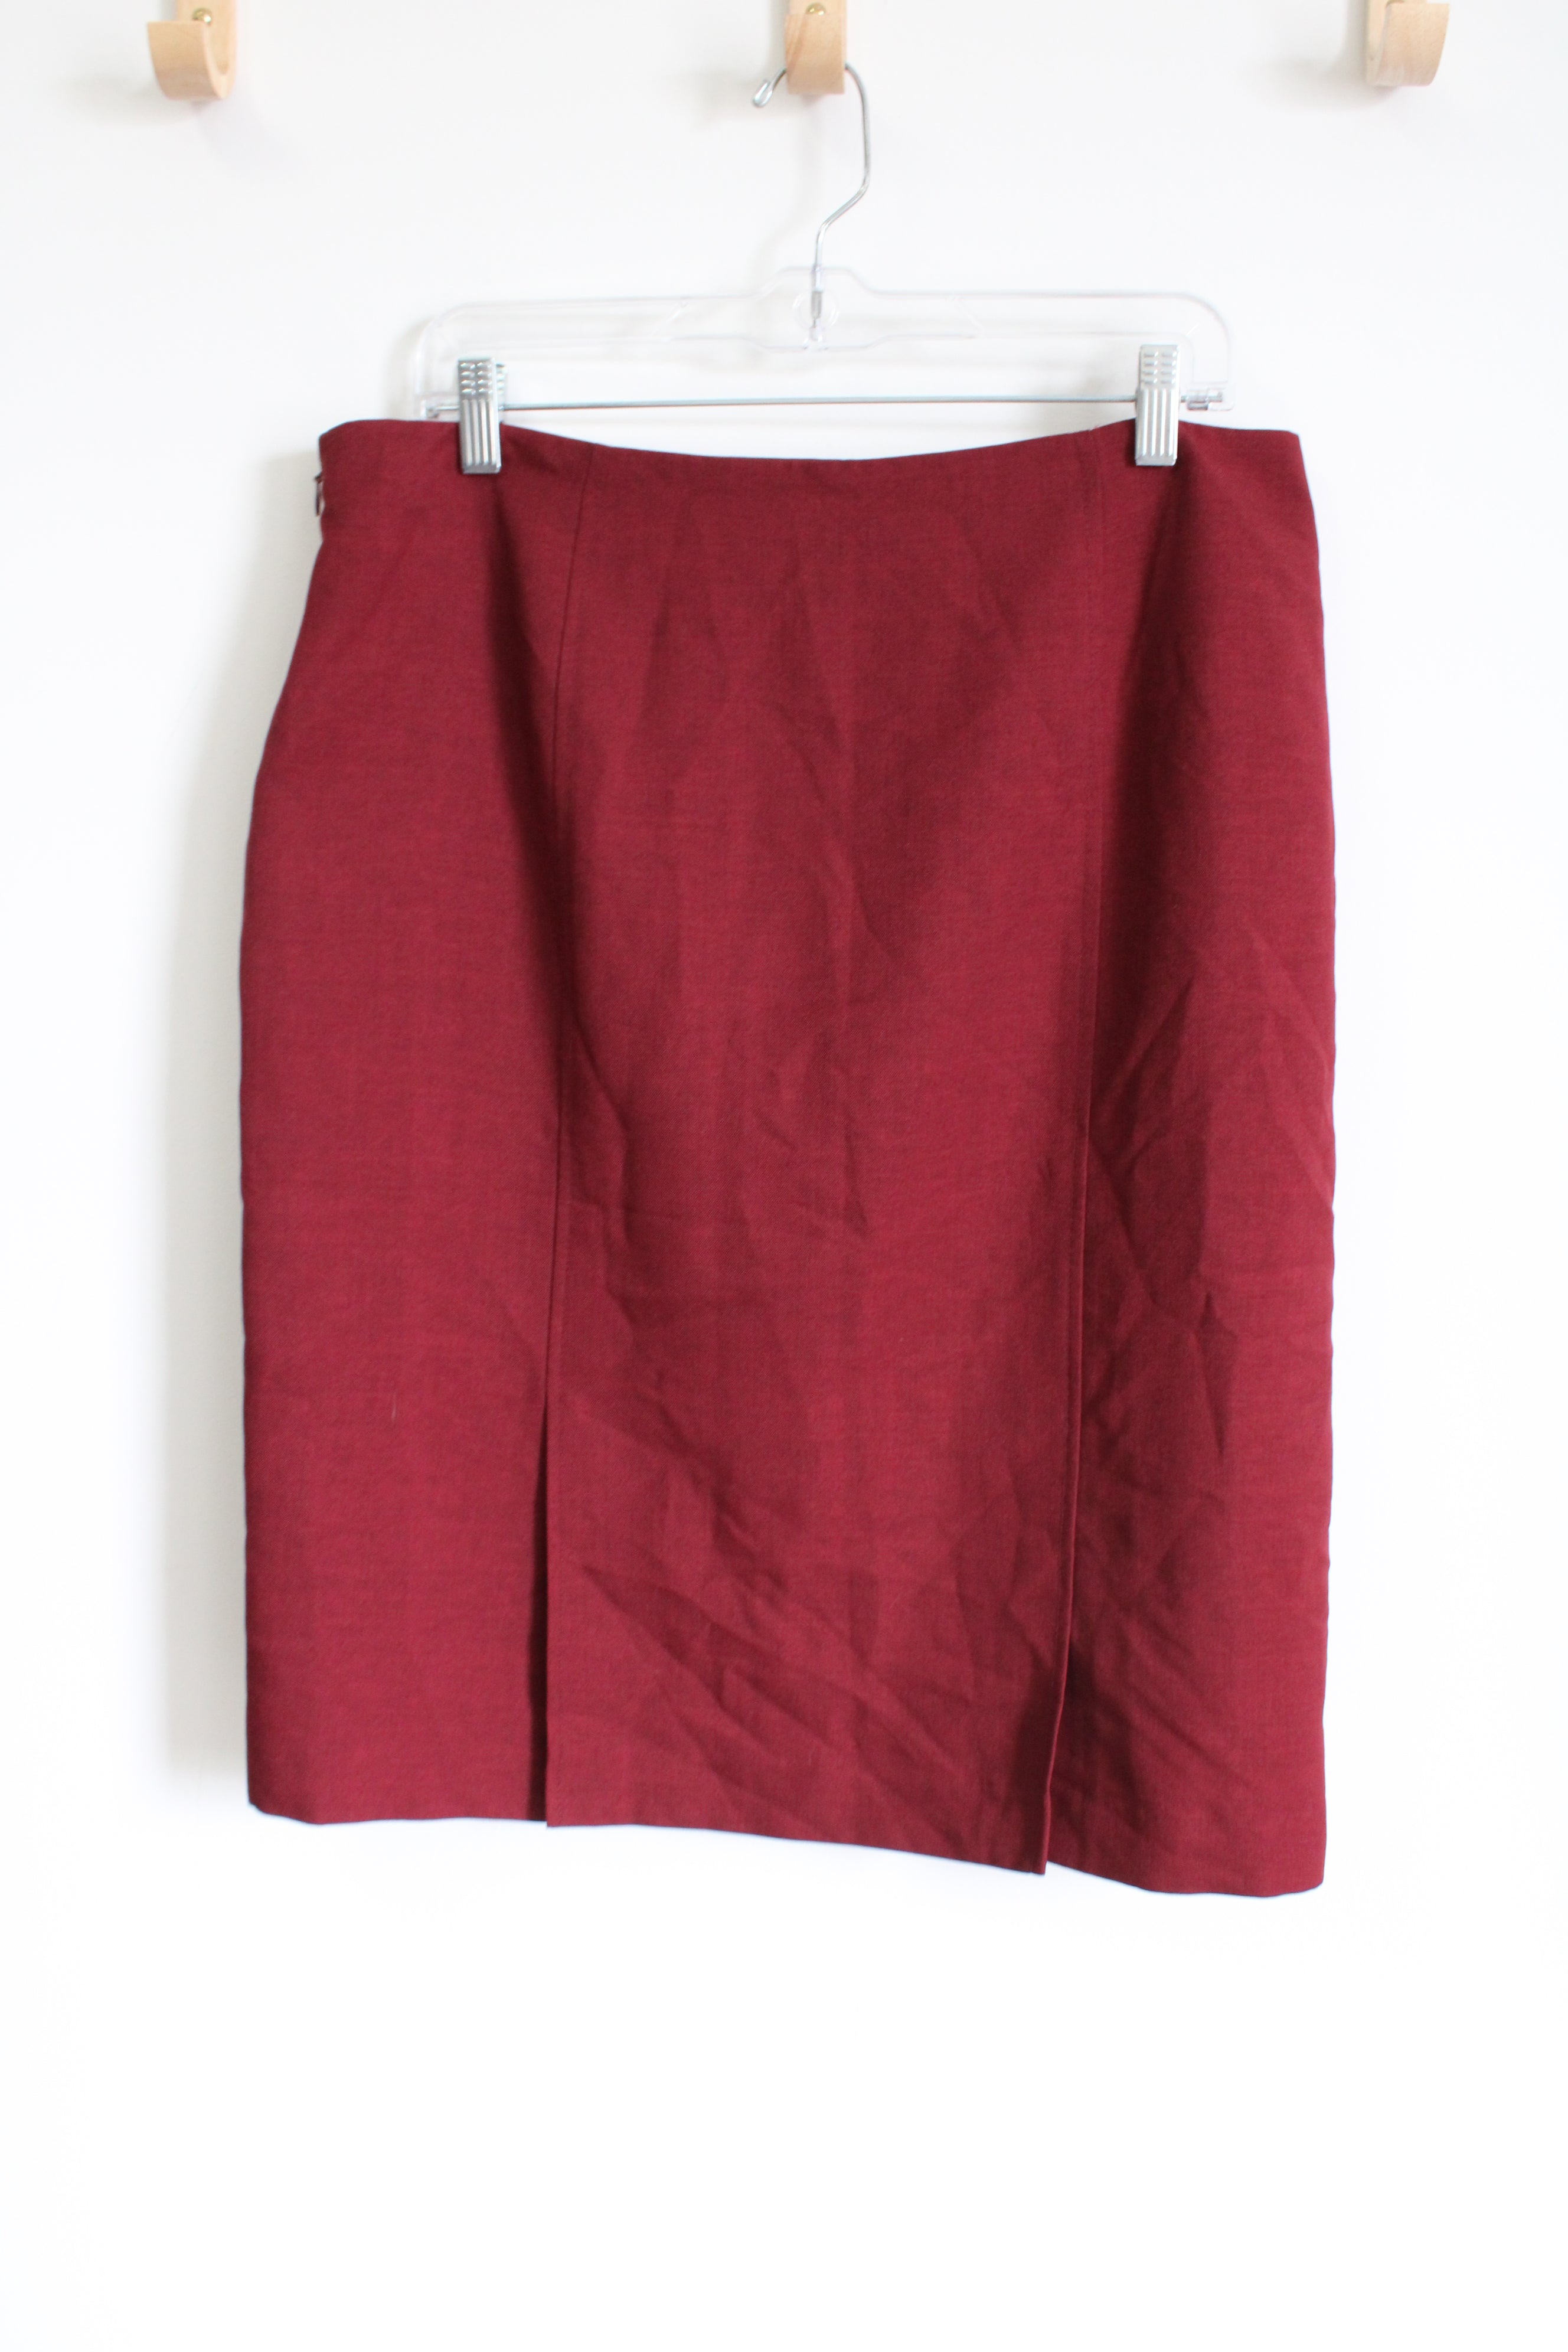 Jones Studio Separates Red Pencil Skirt | 14